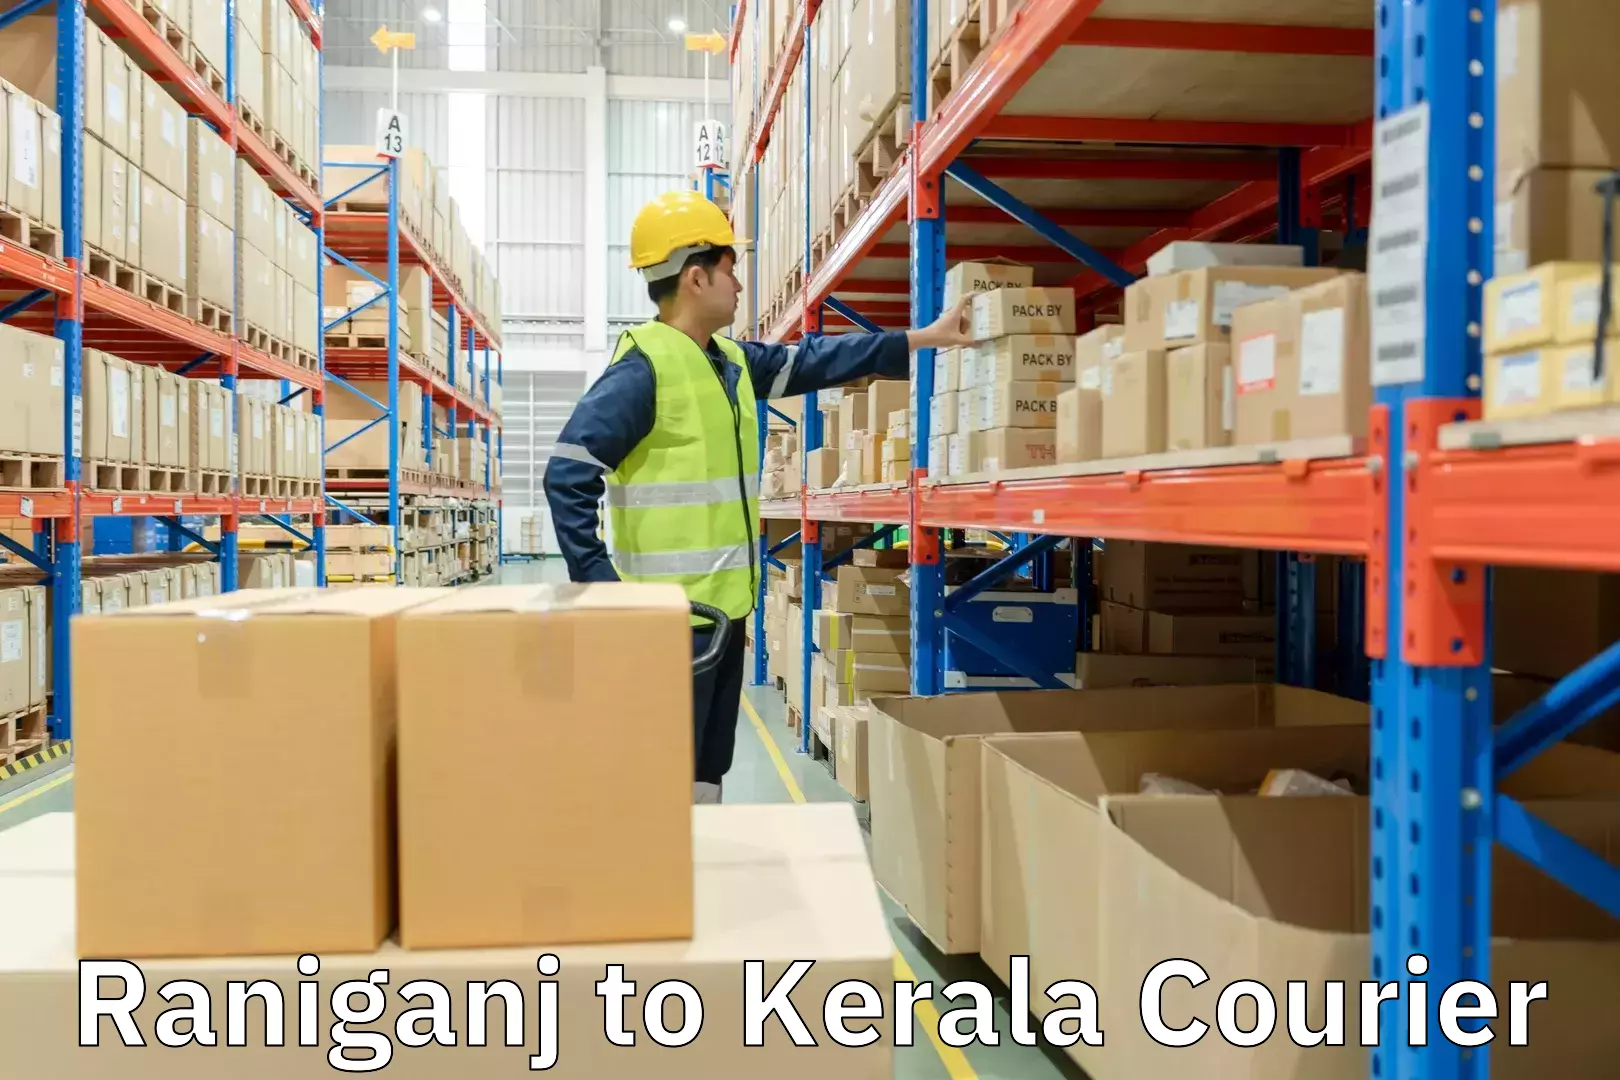 Doorstep delivery service Raniganj to Kerala